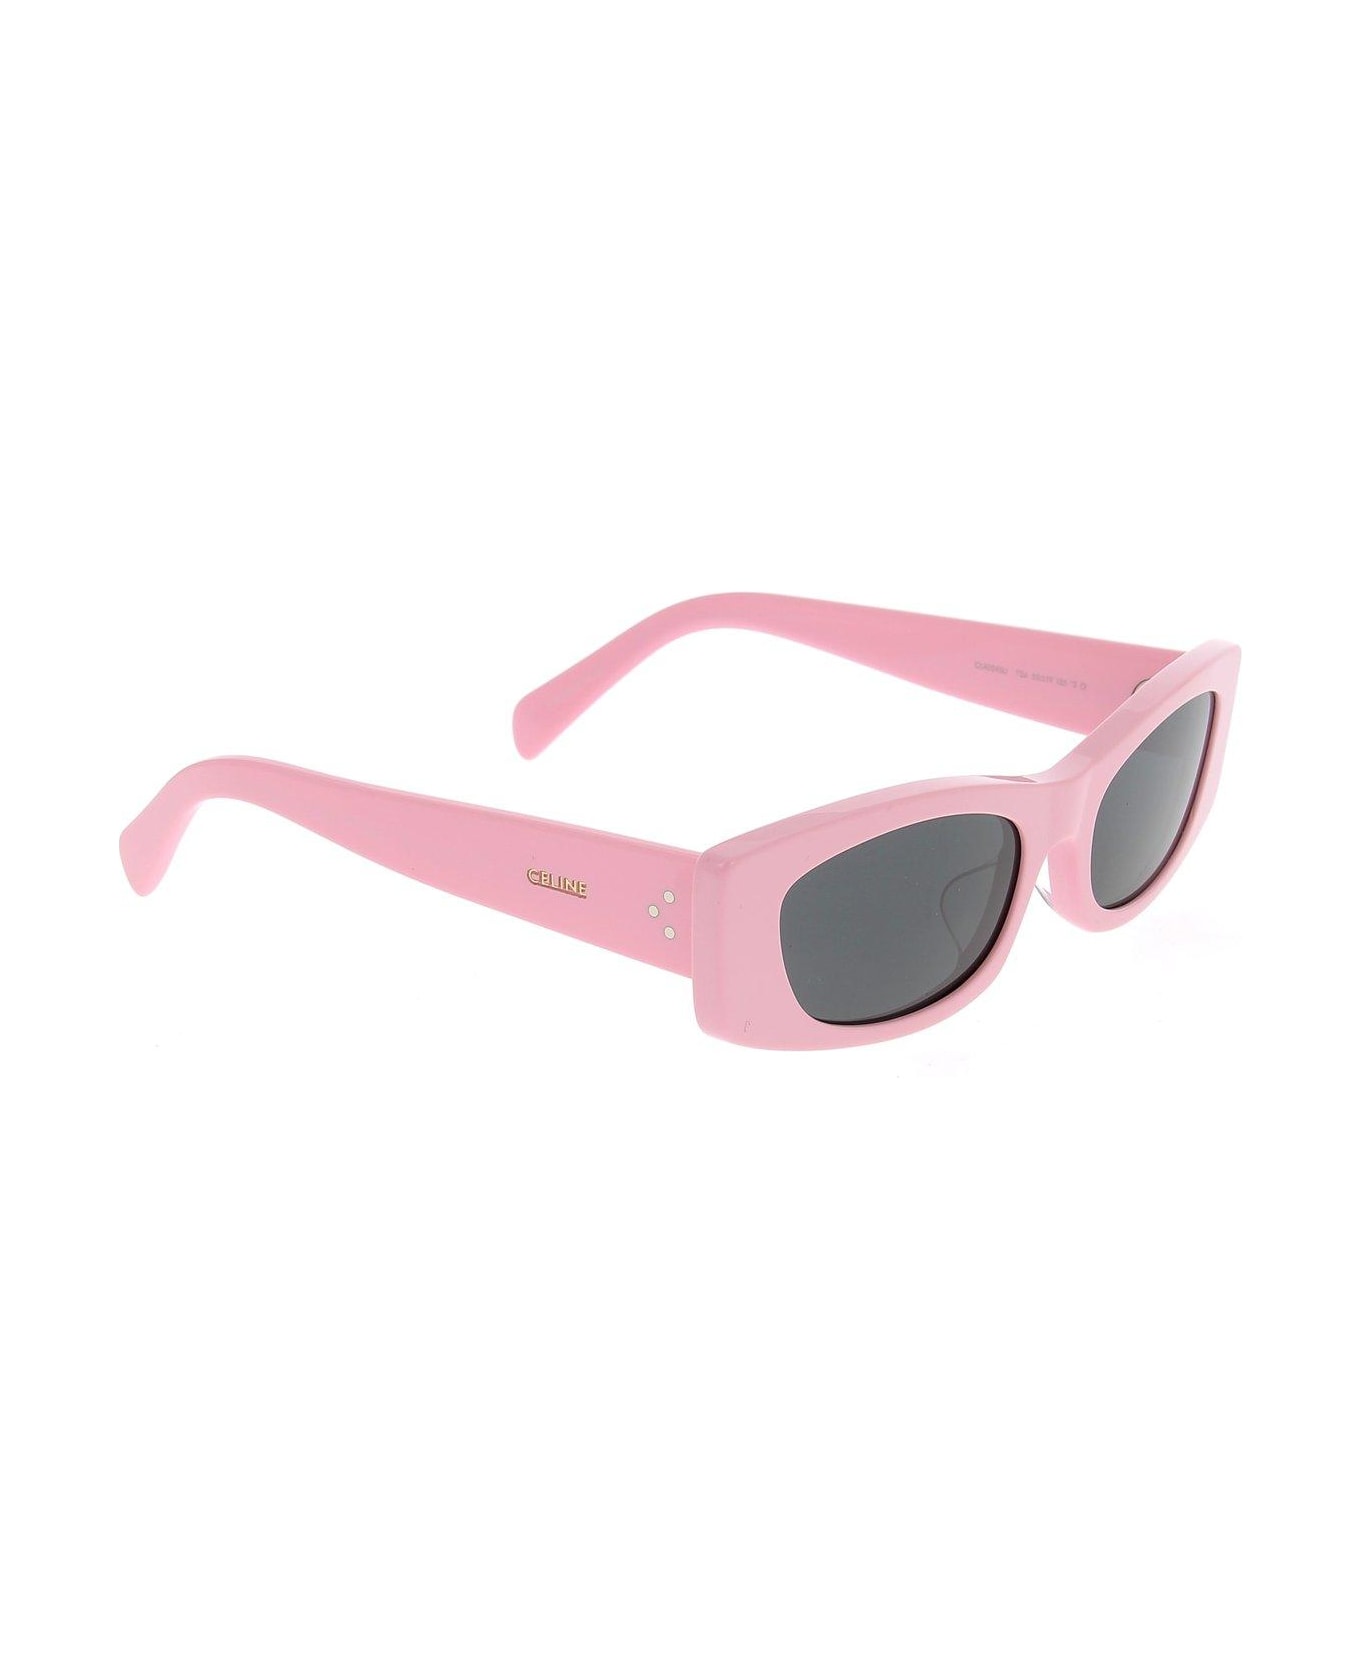 Celine rectangular Frame Sunglasses - 72a